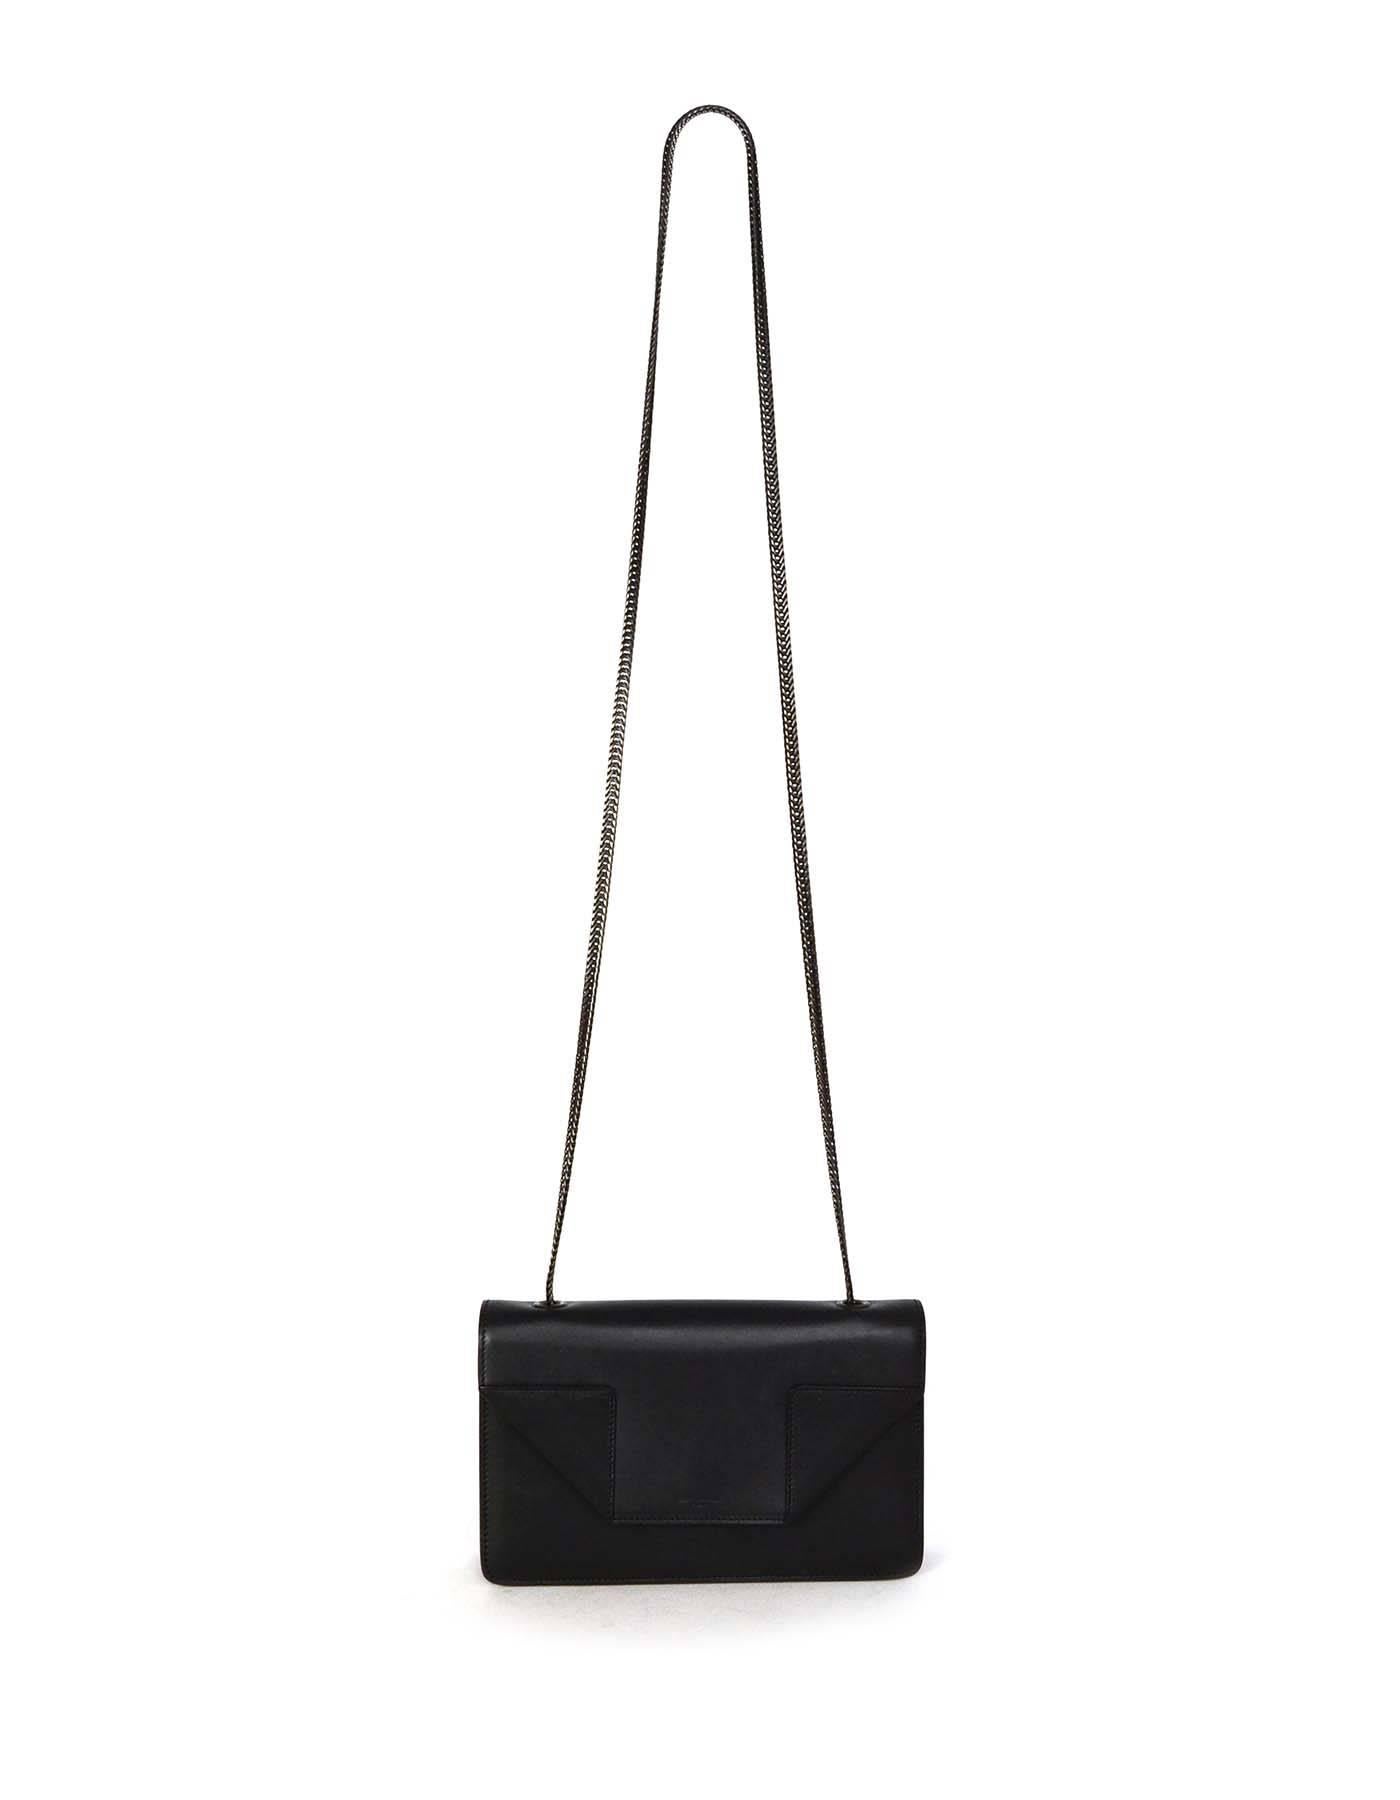 Saint Laurent Black Leather Small 'Betty' Crossbody Bag BHW 4